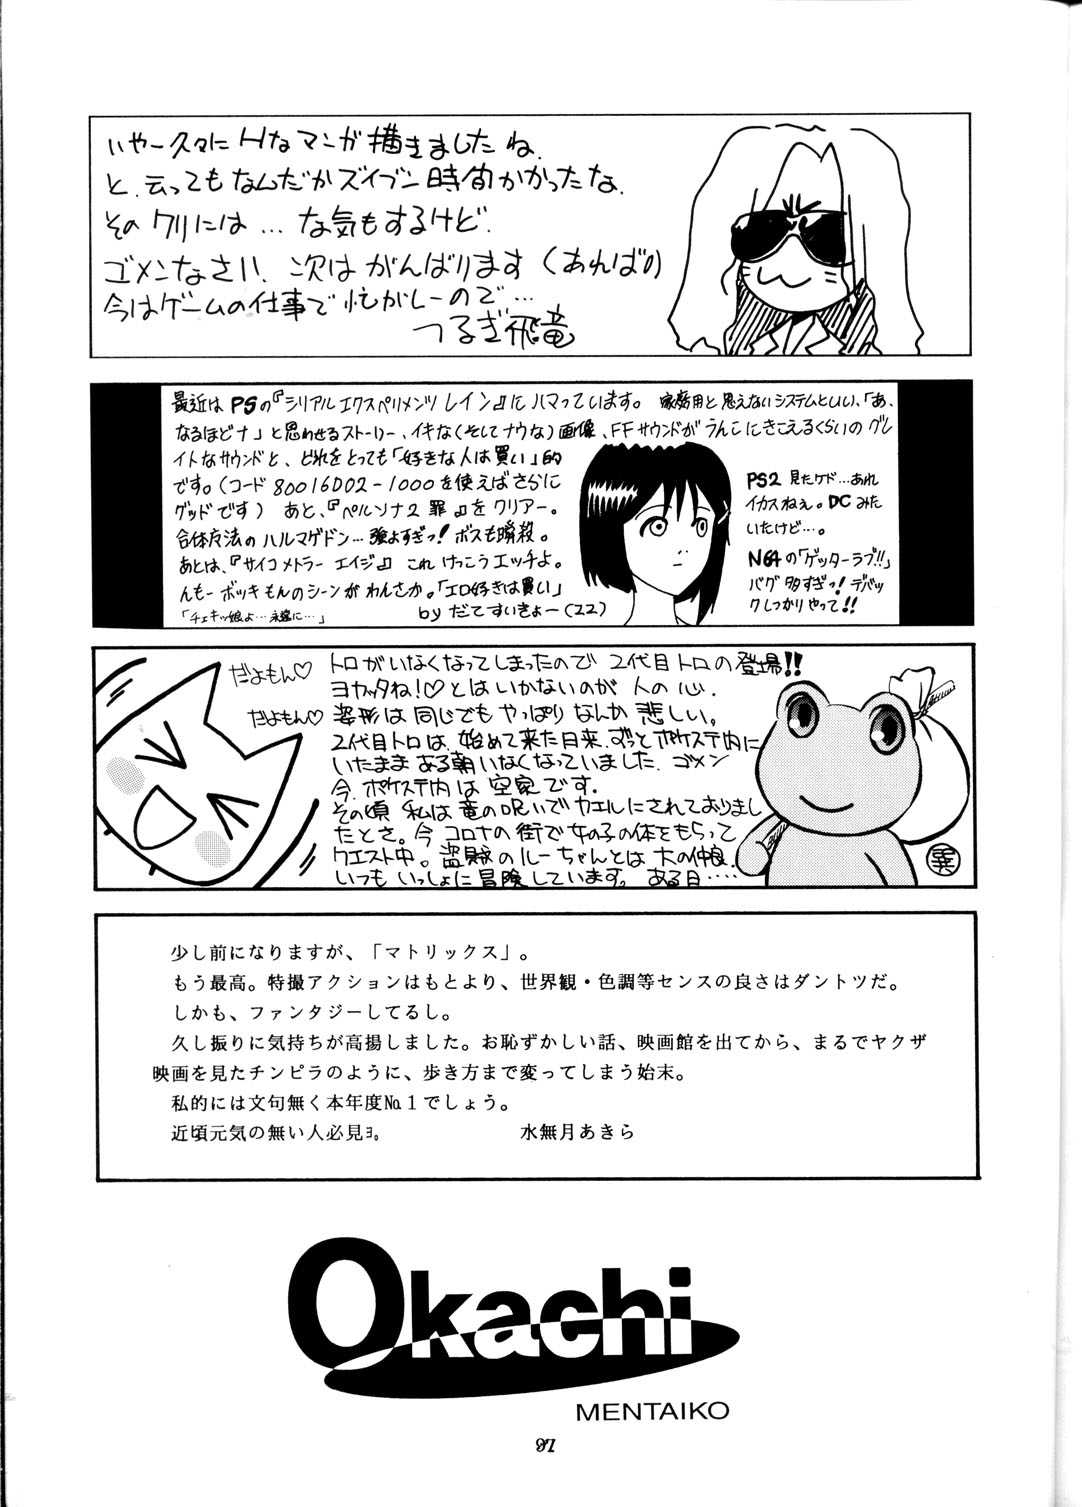 (CR26) [ALPS, Okachimentaiko, Rippadou] NEXT Situation Magazine 1 (Various) 